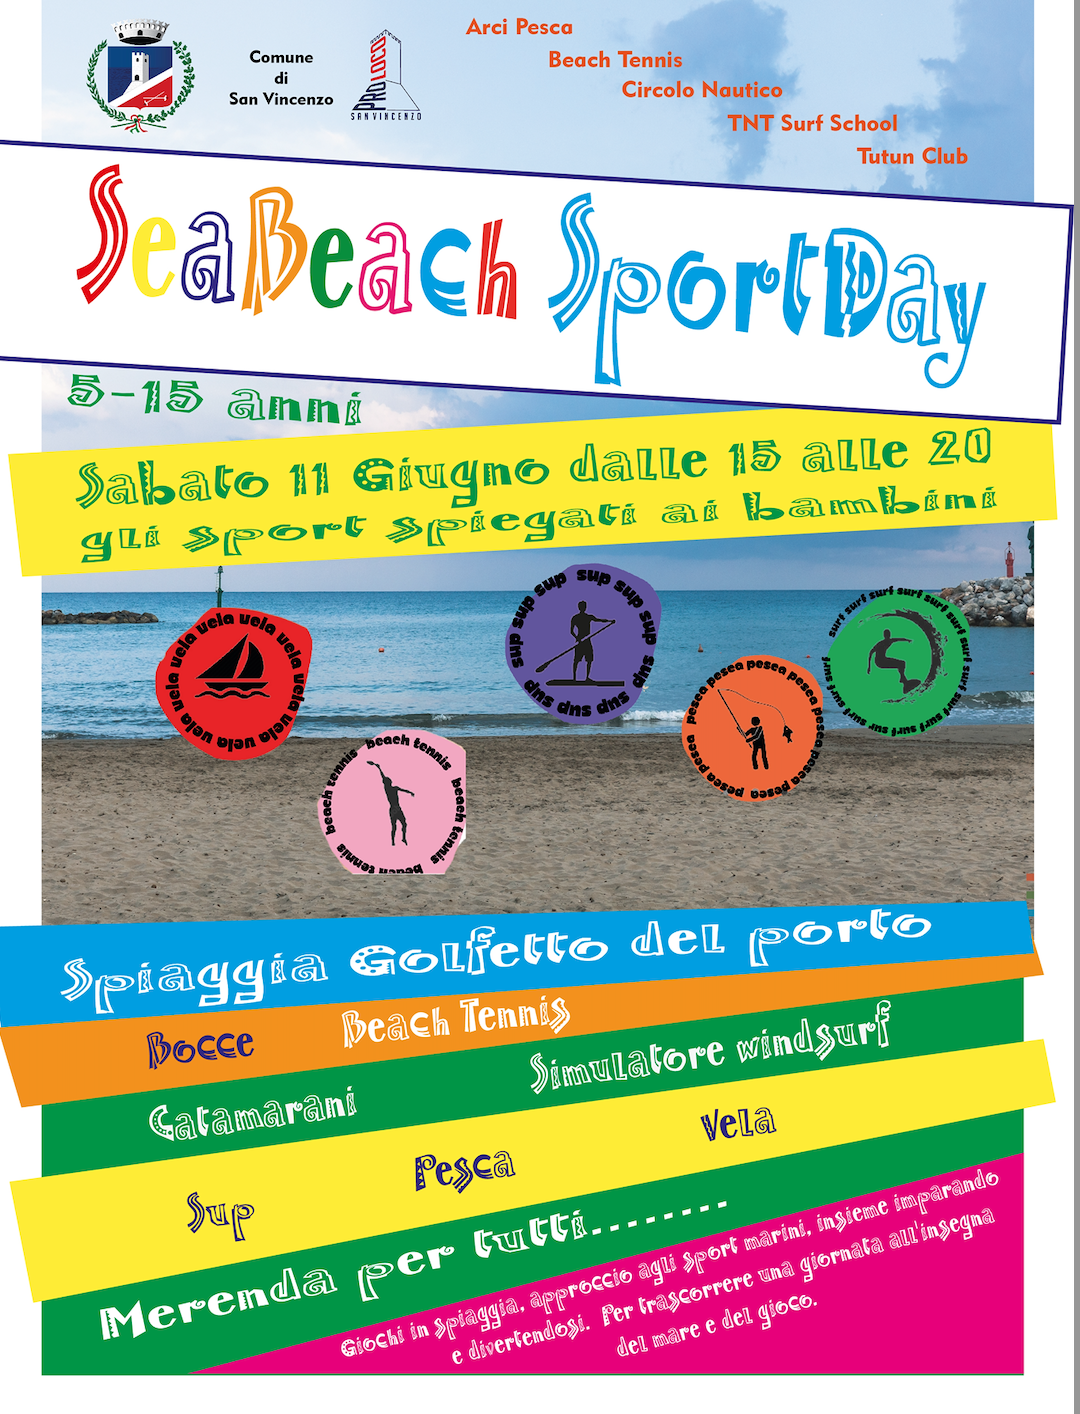 Sea Beach sport day